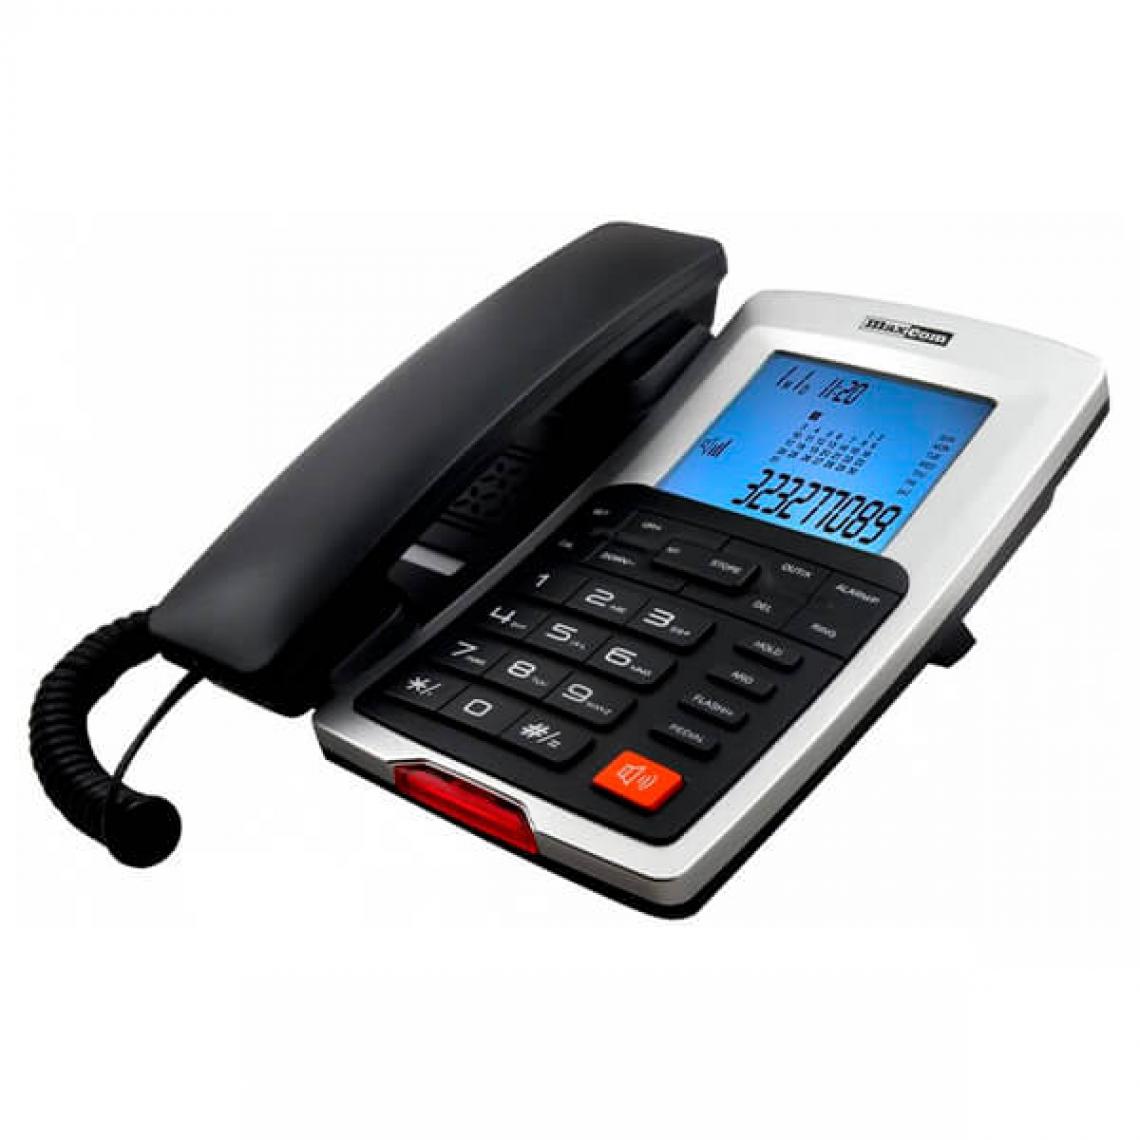 Maxcom - Maxcom KXT790 Téléphone fixe Noir/Argent (Black Silver) - Téléphone fixe filaire